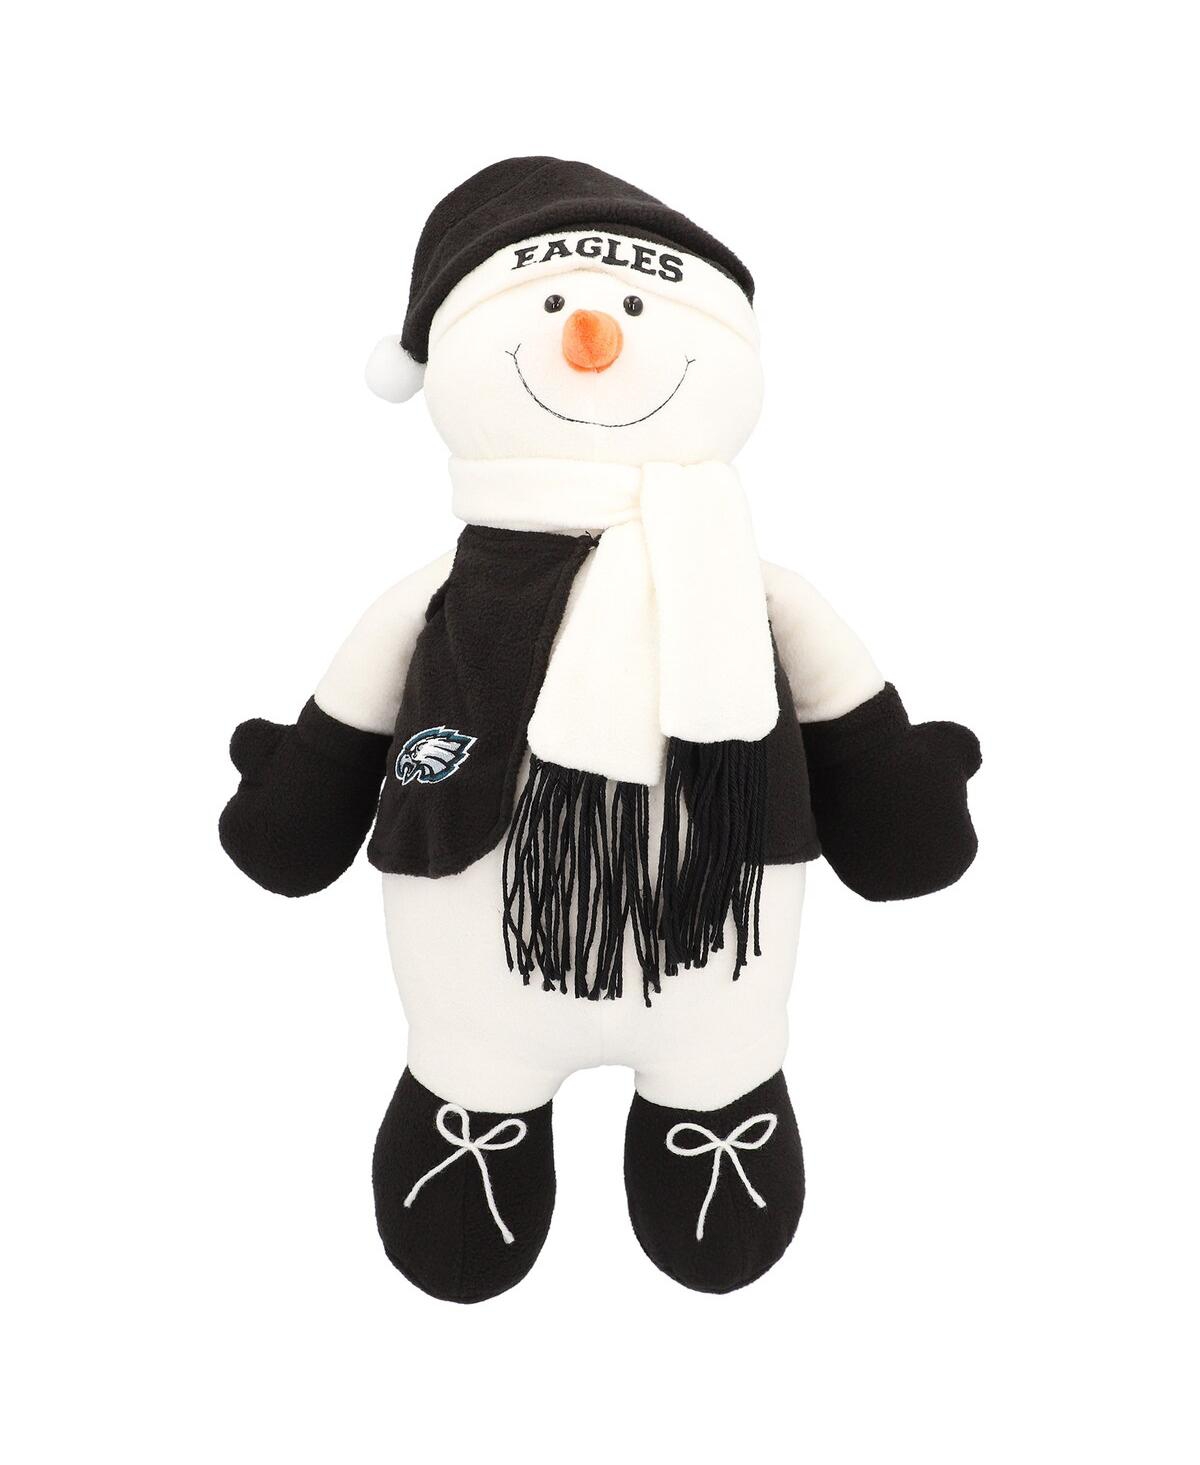 The Memory Company Philadelphia Eagles 17" Frosty Snowman Mascot - White, Black